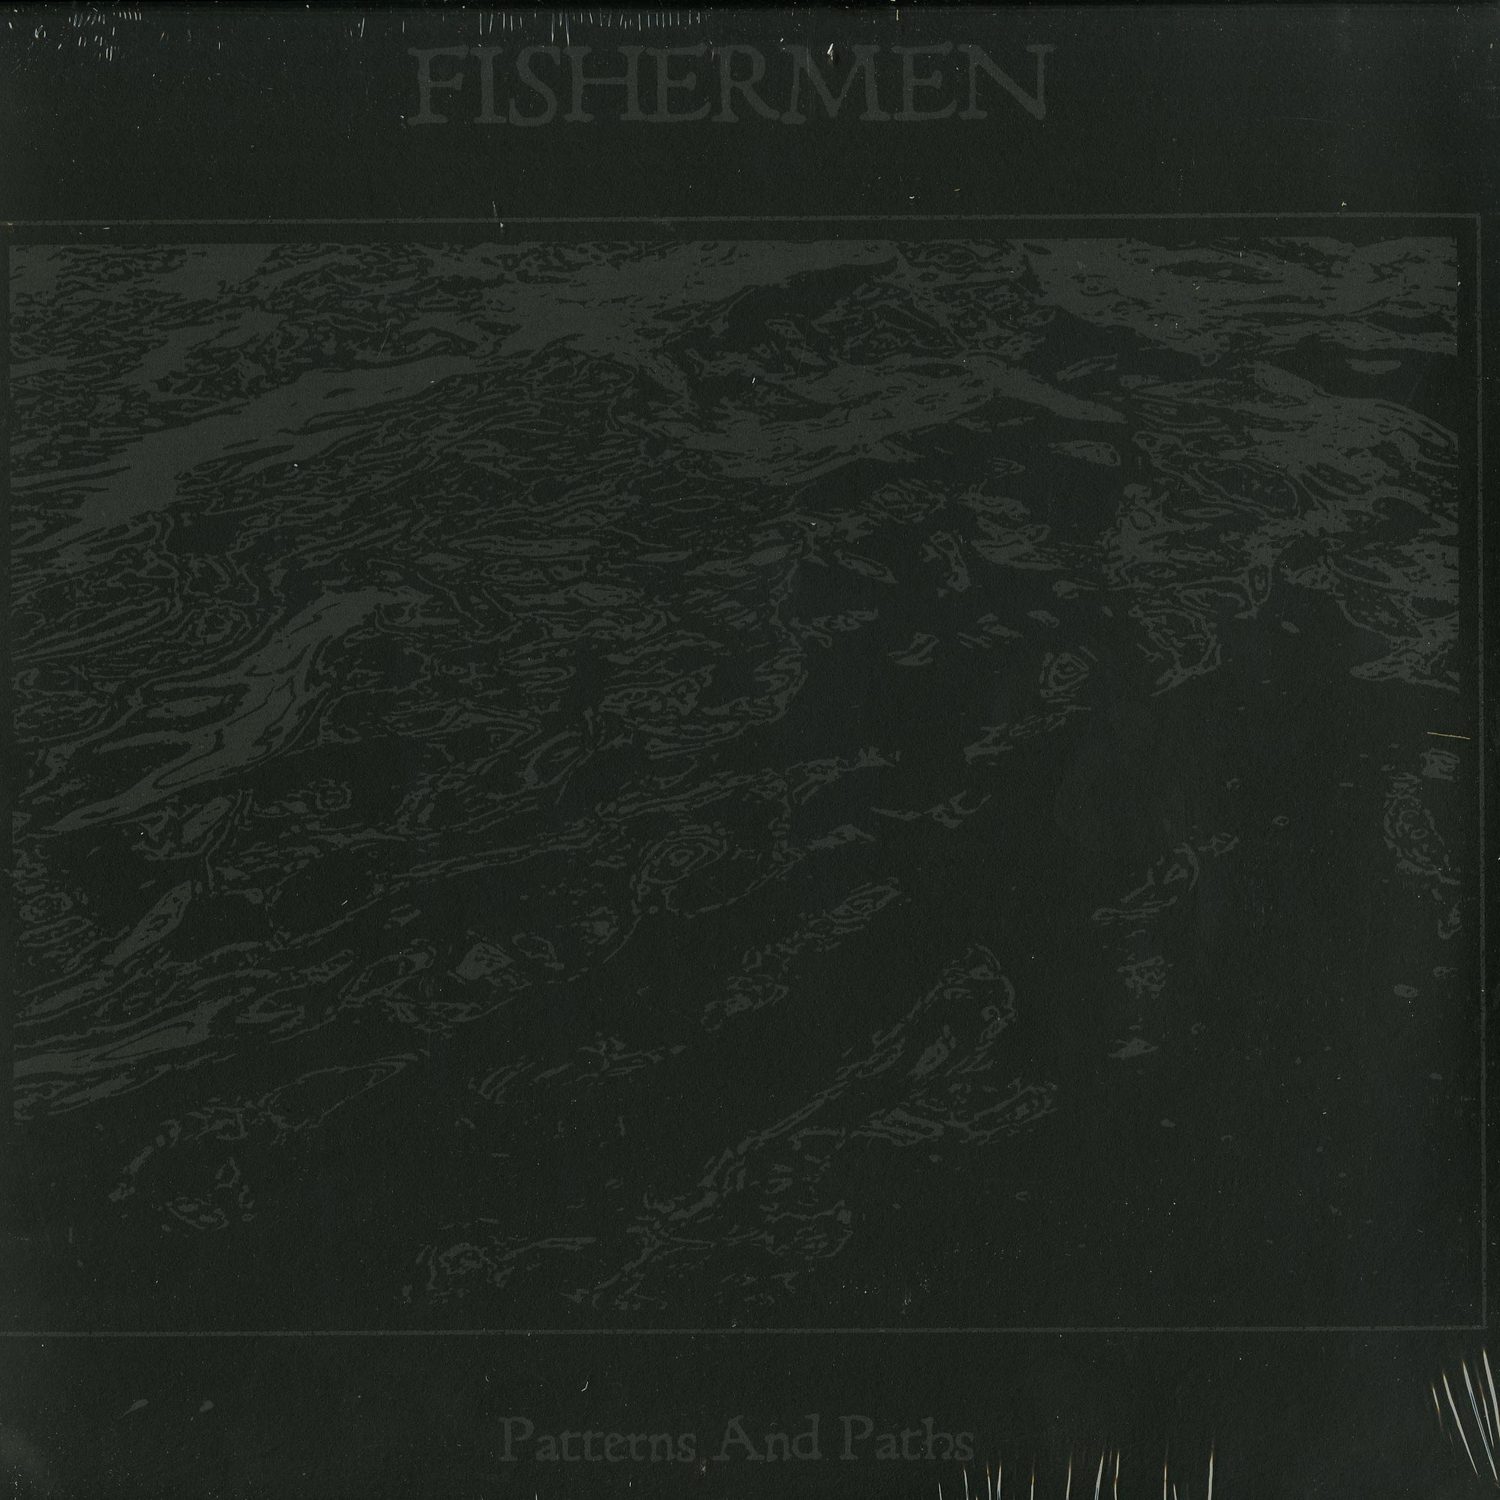 Fisherman - PATTERNS AND PATHS 